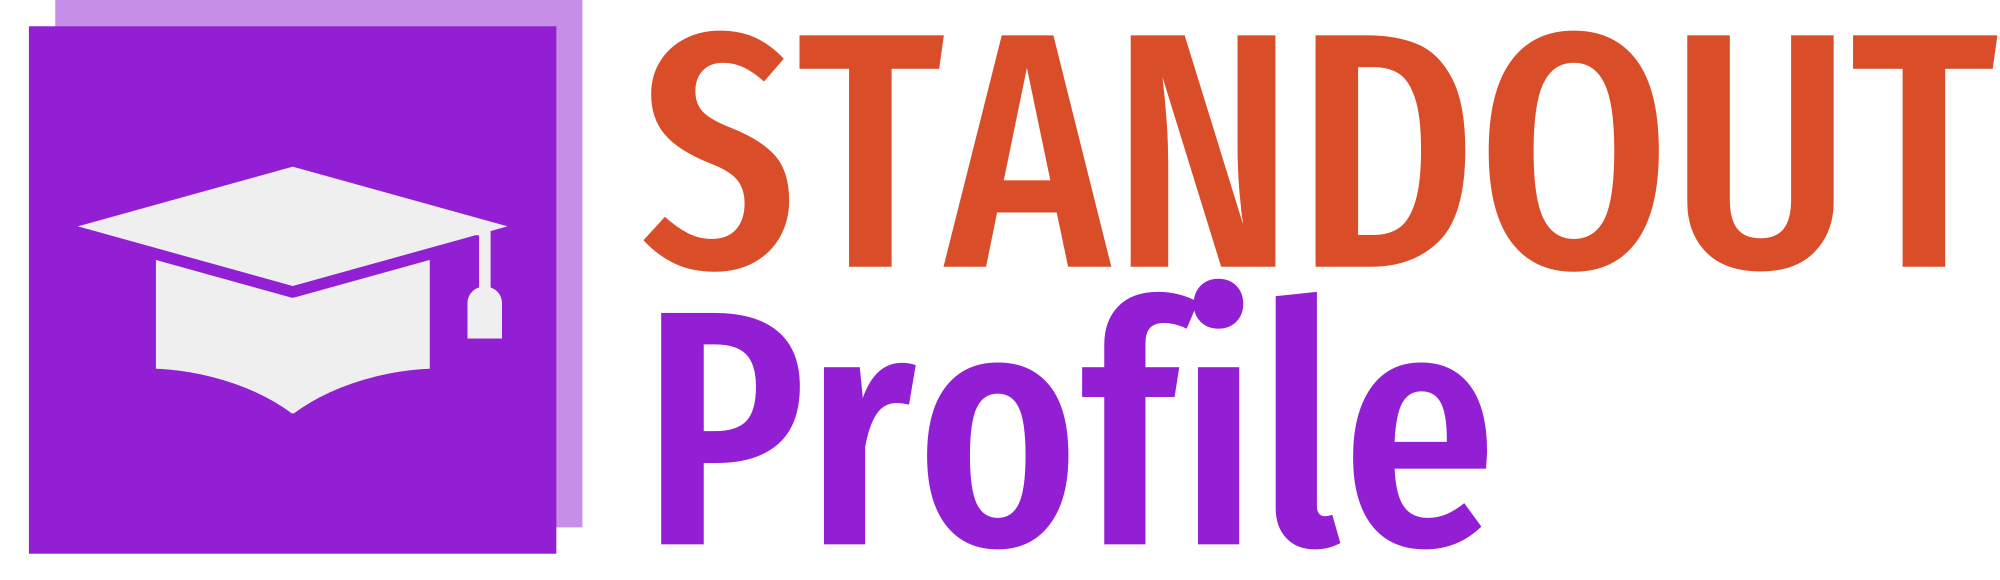 Standout Profile Site